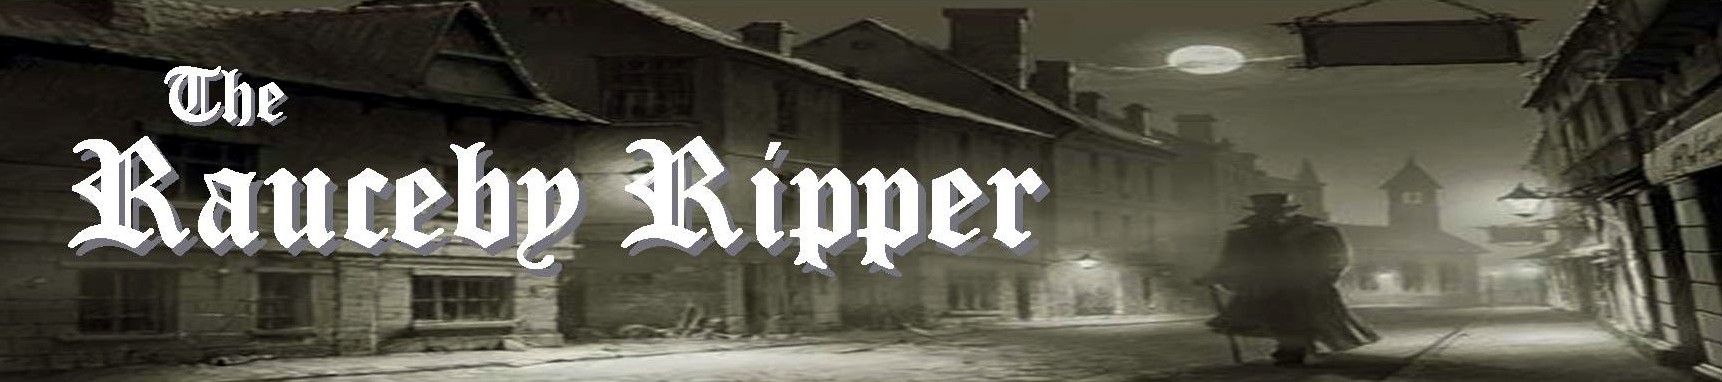 The Rauceby Ripper